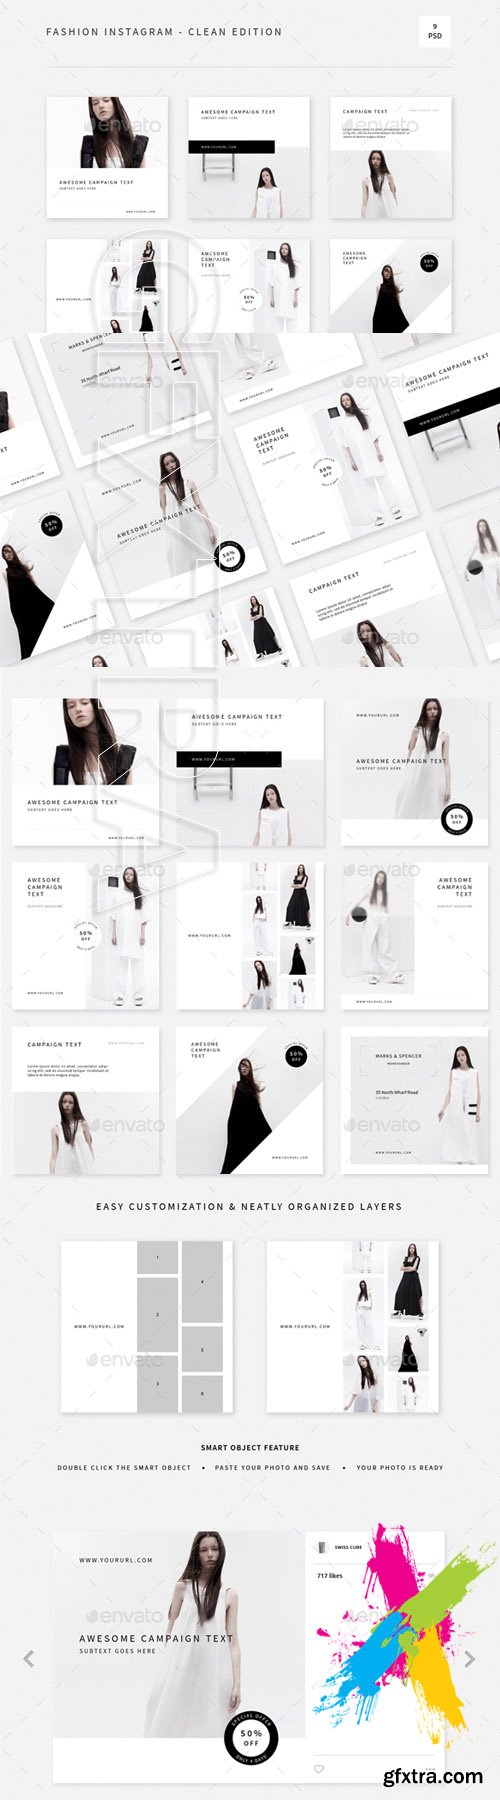 GraphicRiver - Fashion Instagram - Clean Edition 20373441